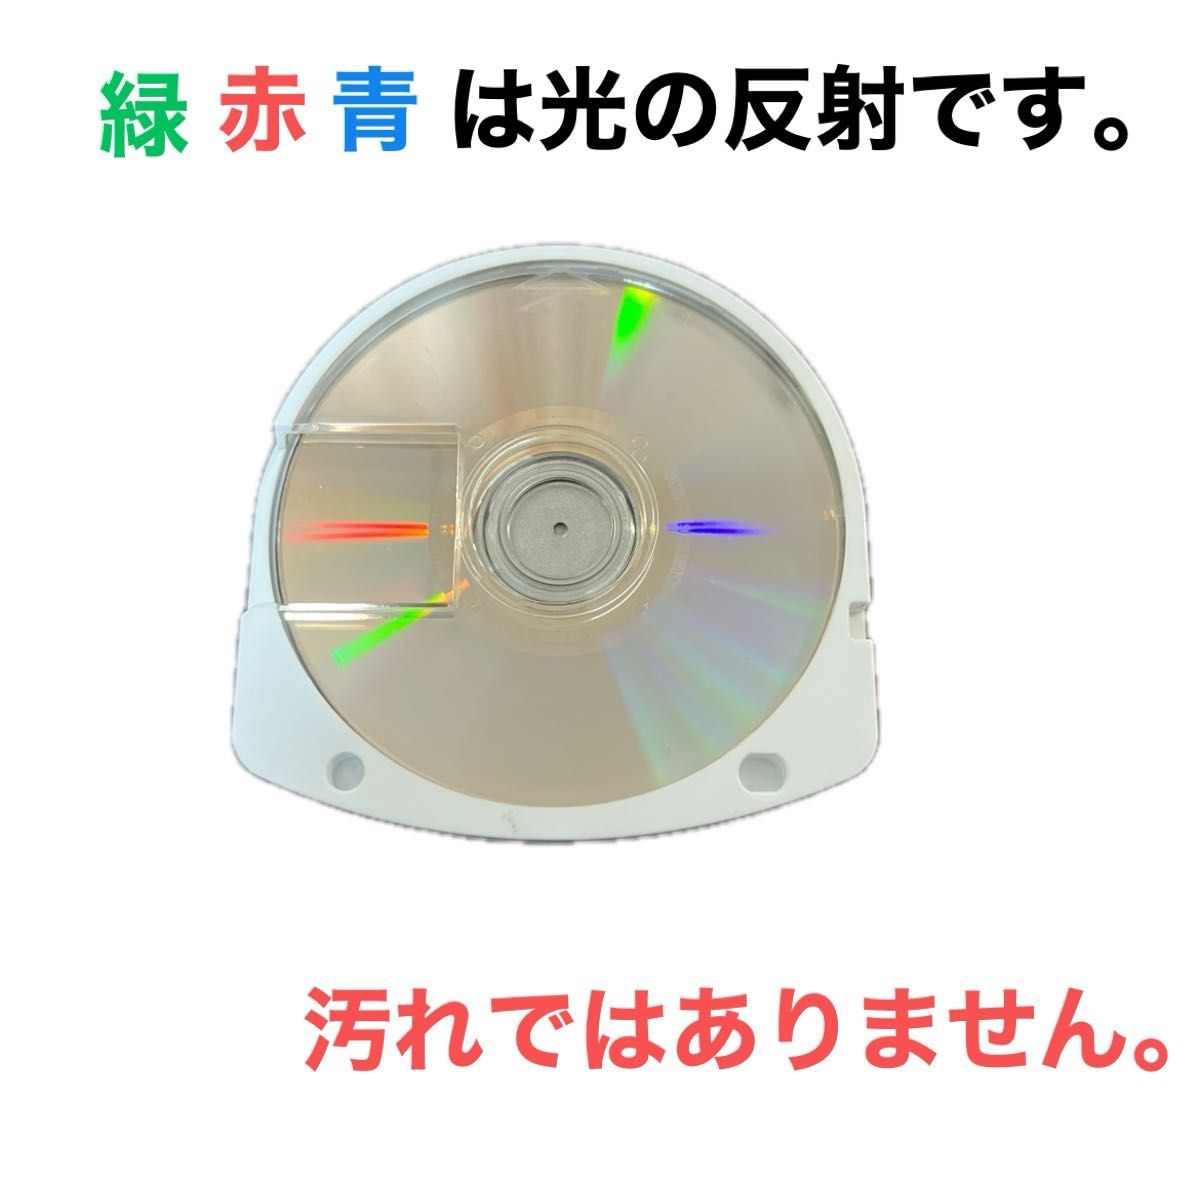 【PSP】 ダンボール戦機 ソフト